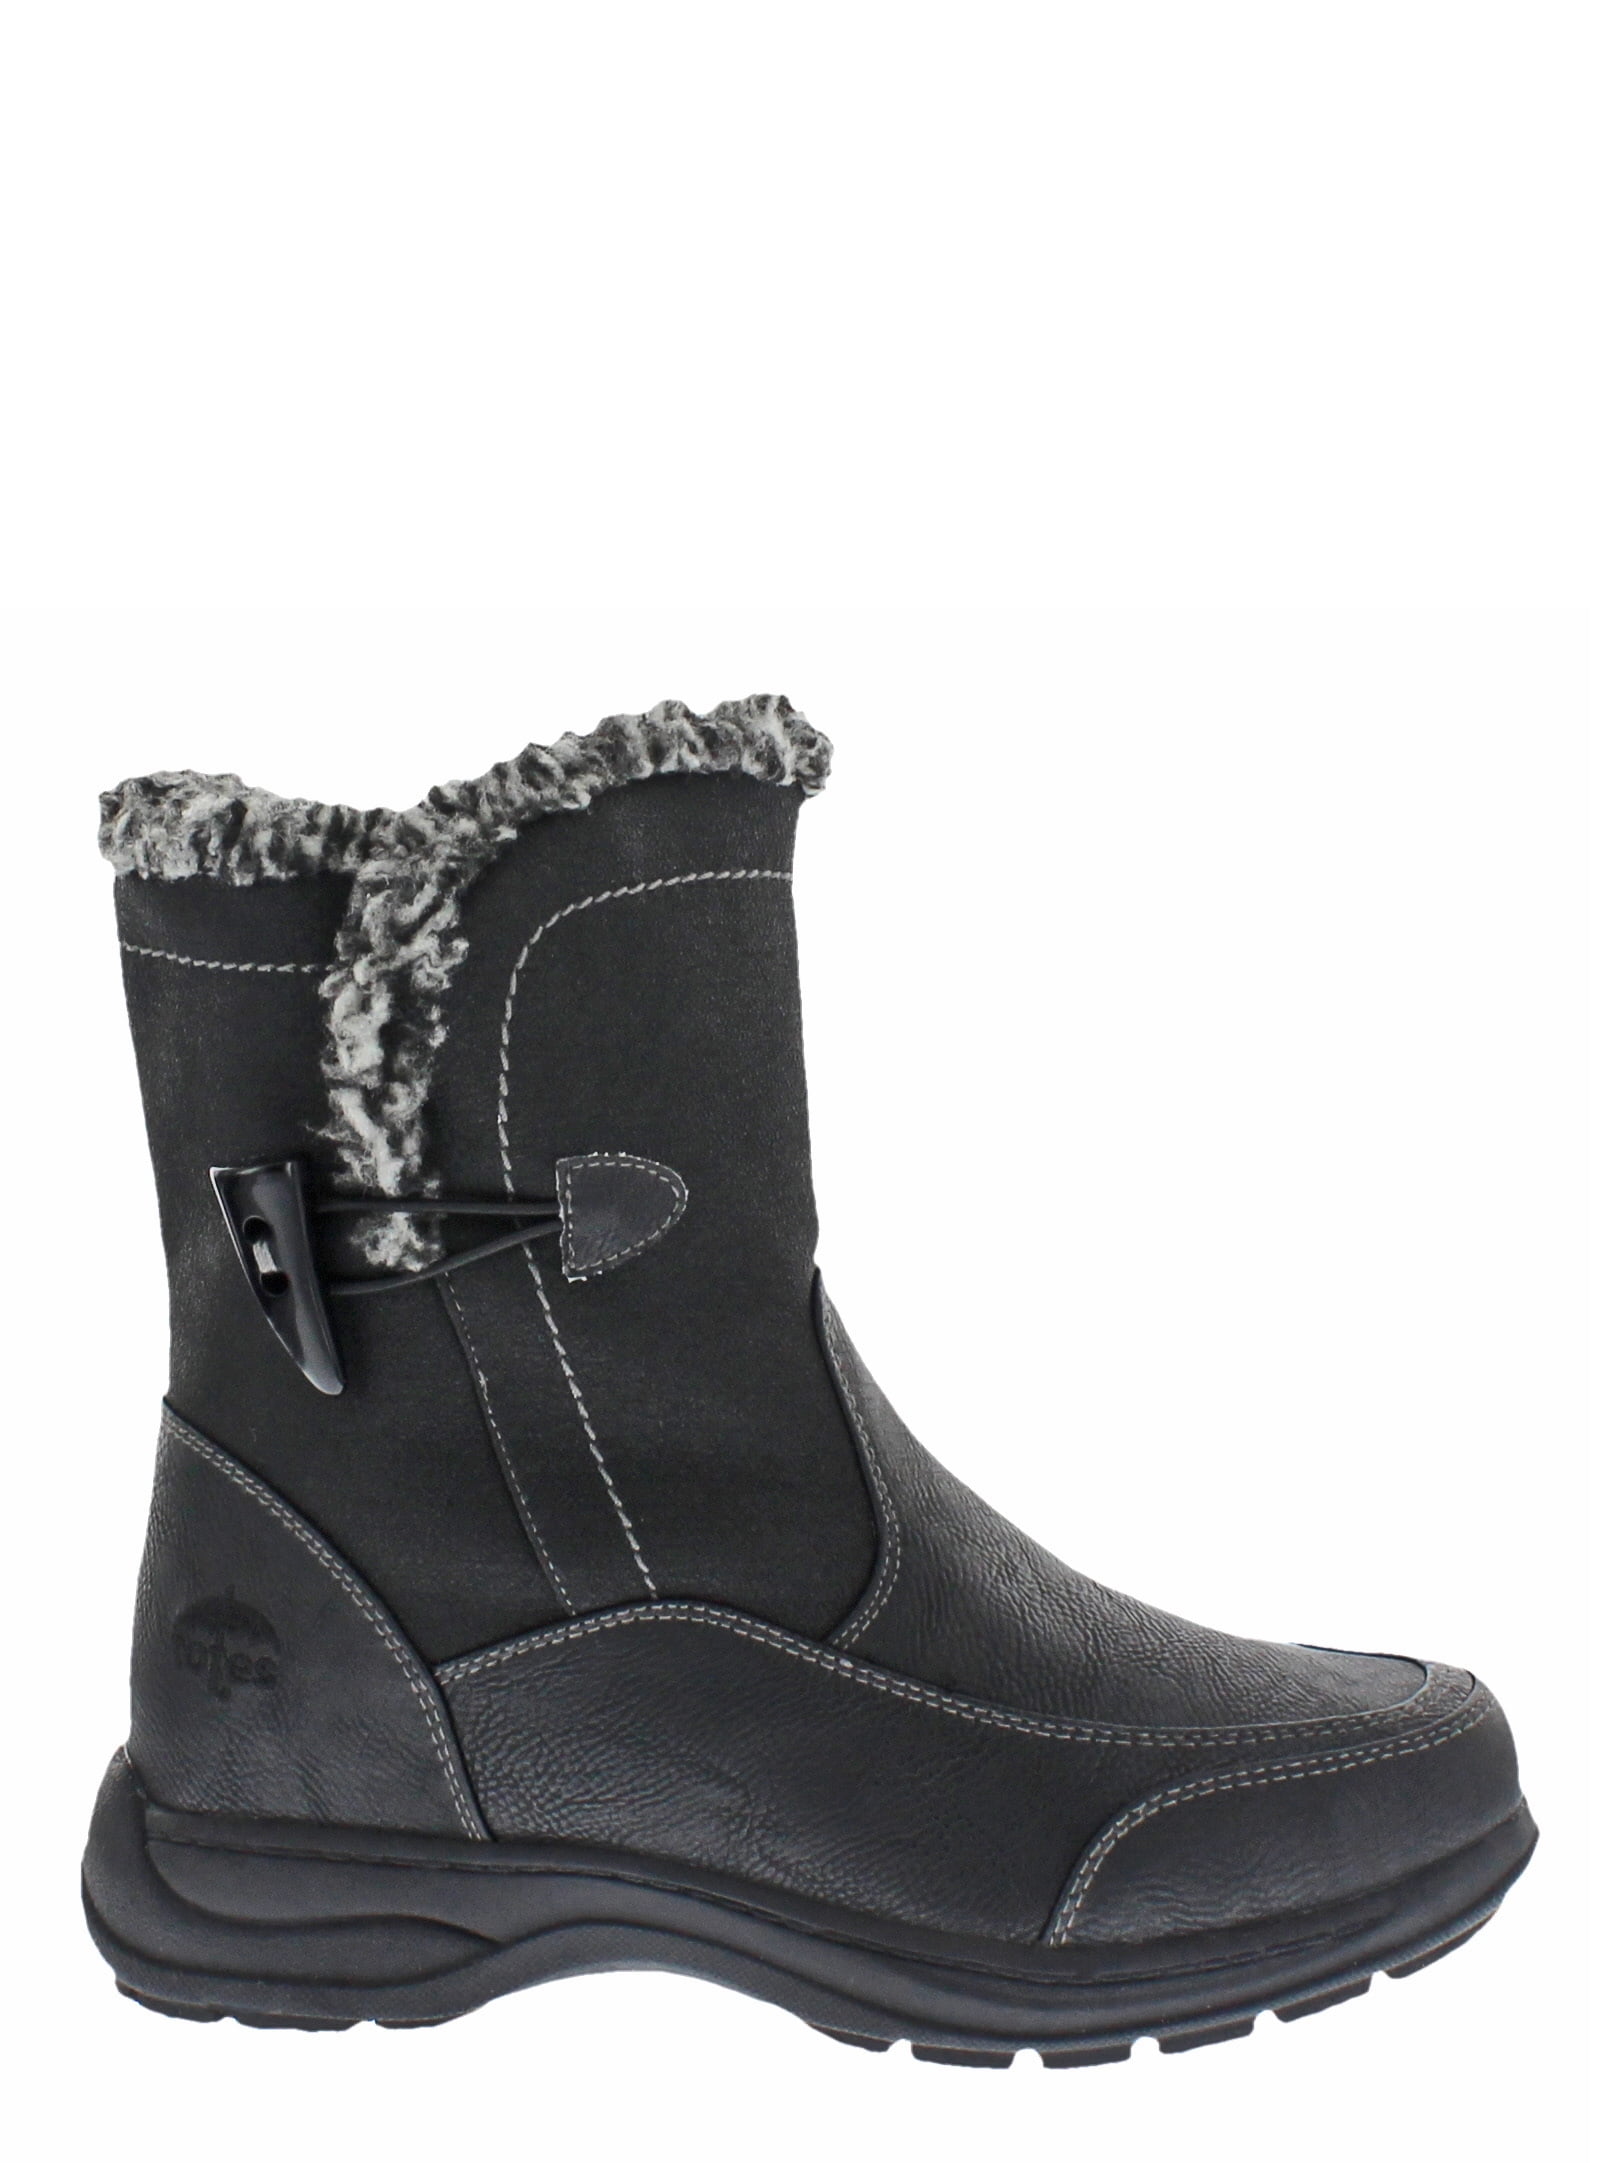 womens wide width winter boots